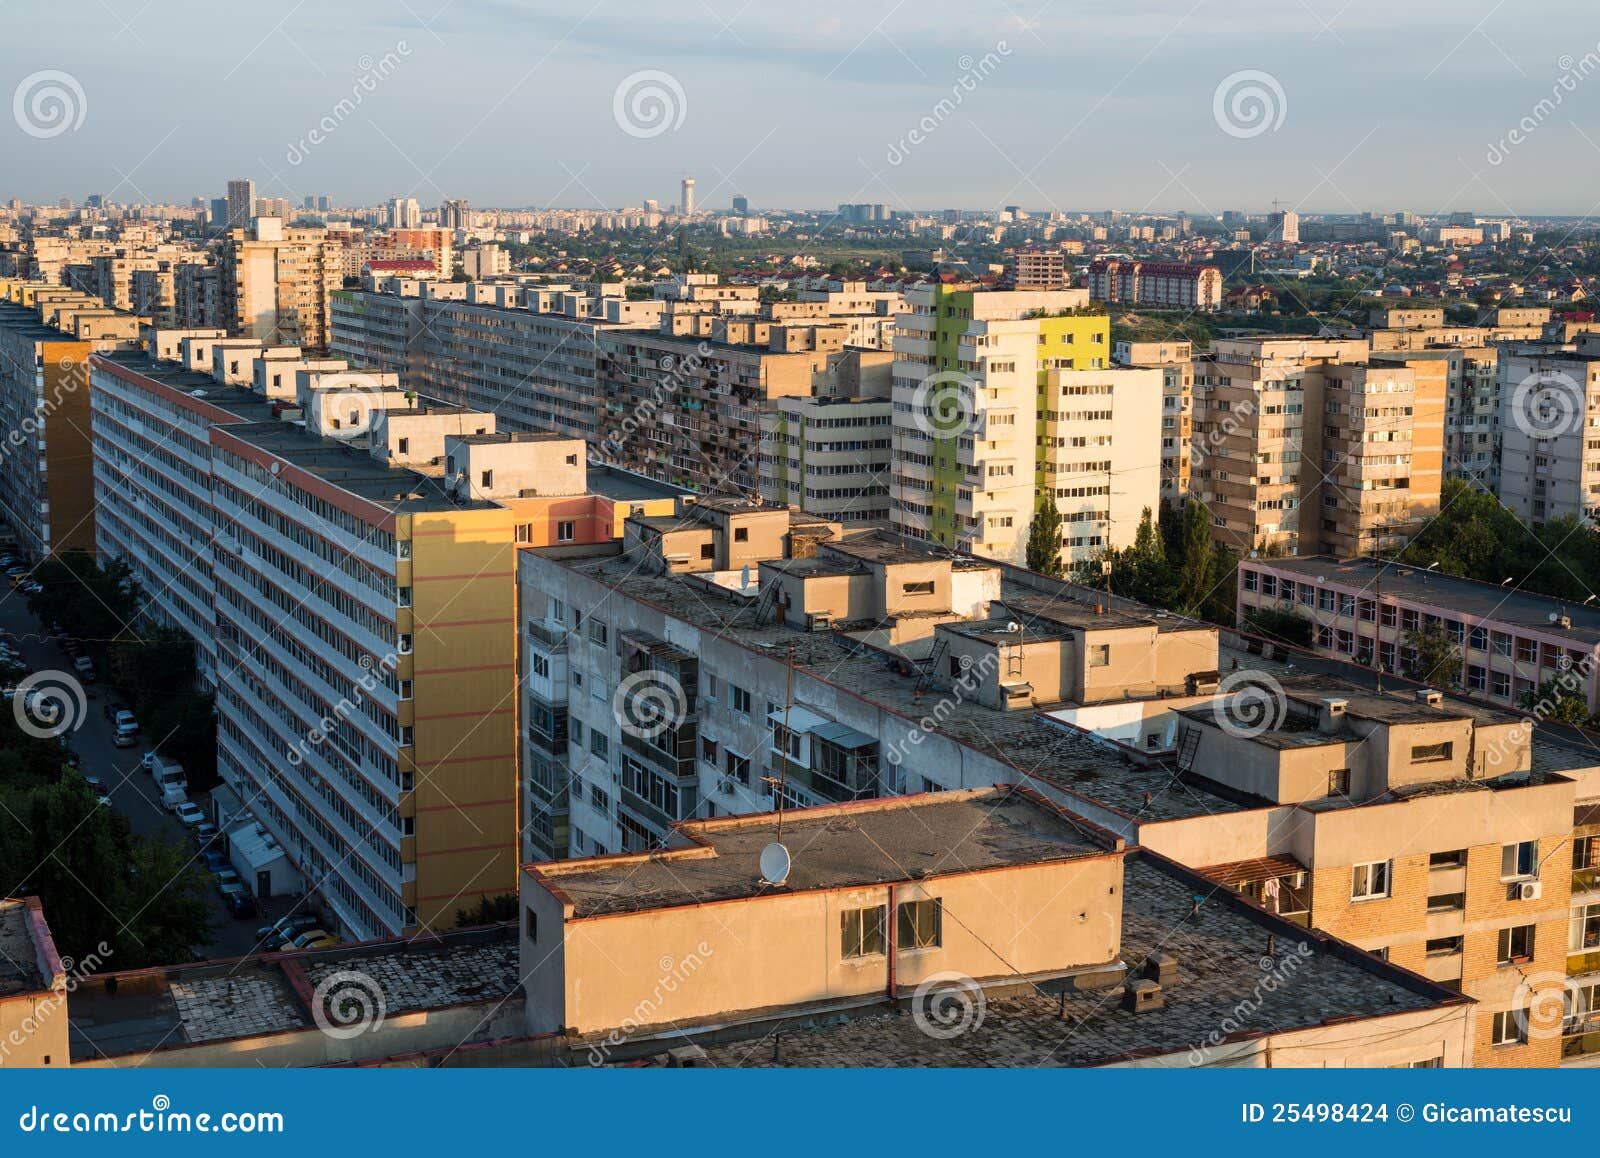 Блоки квартир от заречья Pantelimon в нижнем свете раннего утра. Бухарест (Bucuresti), Румыния